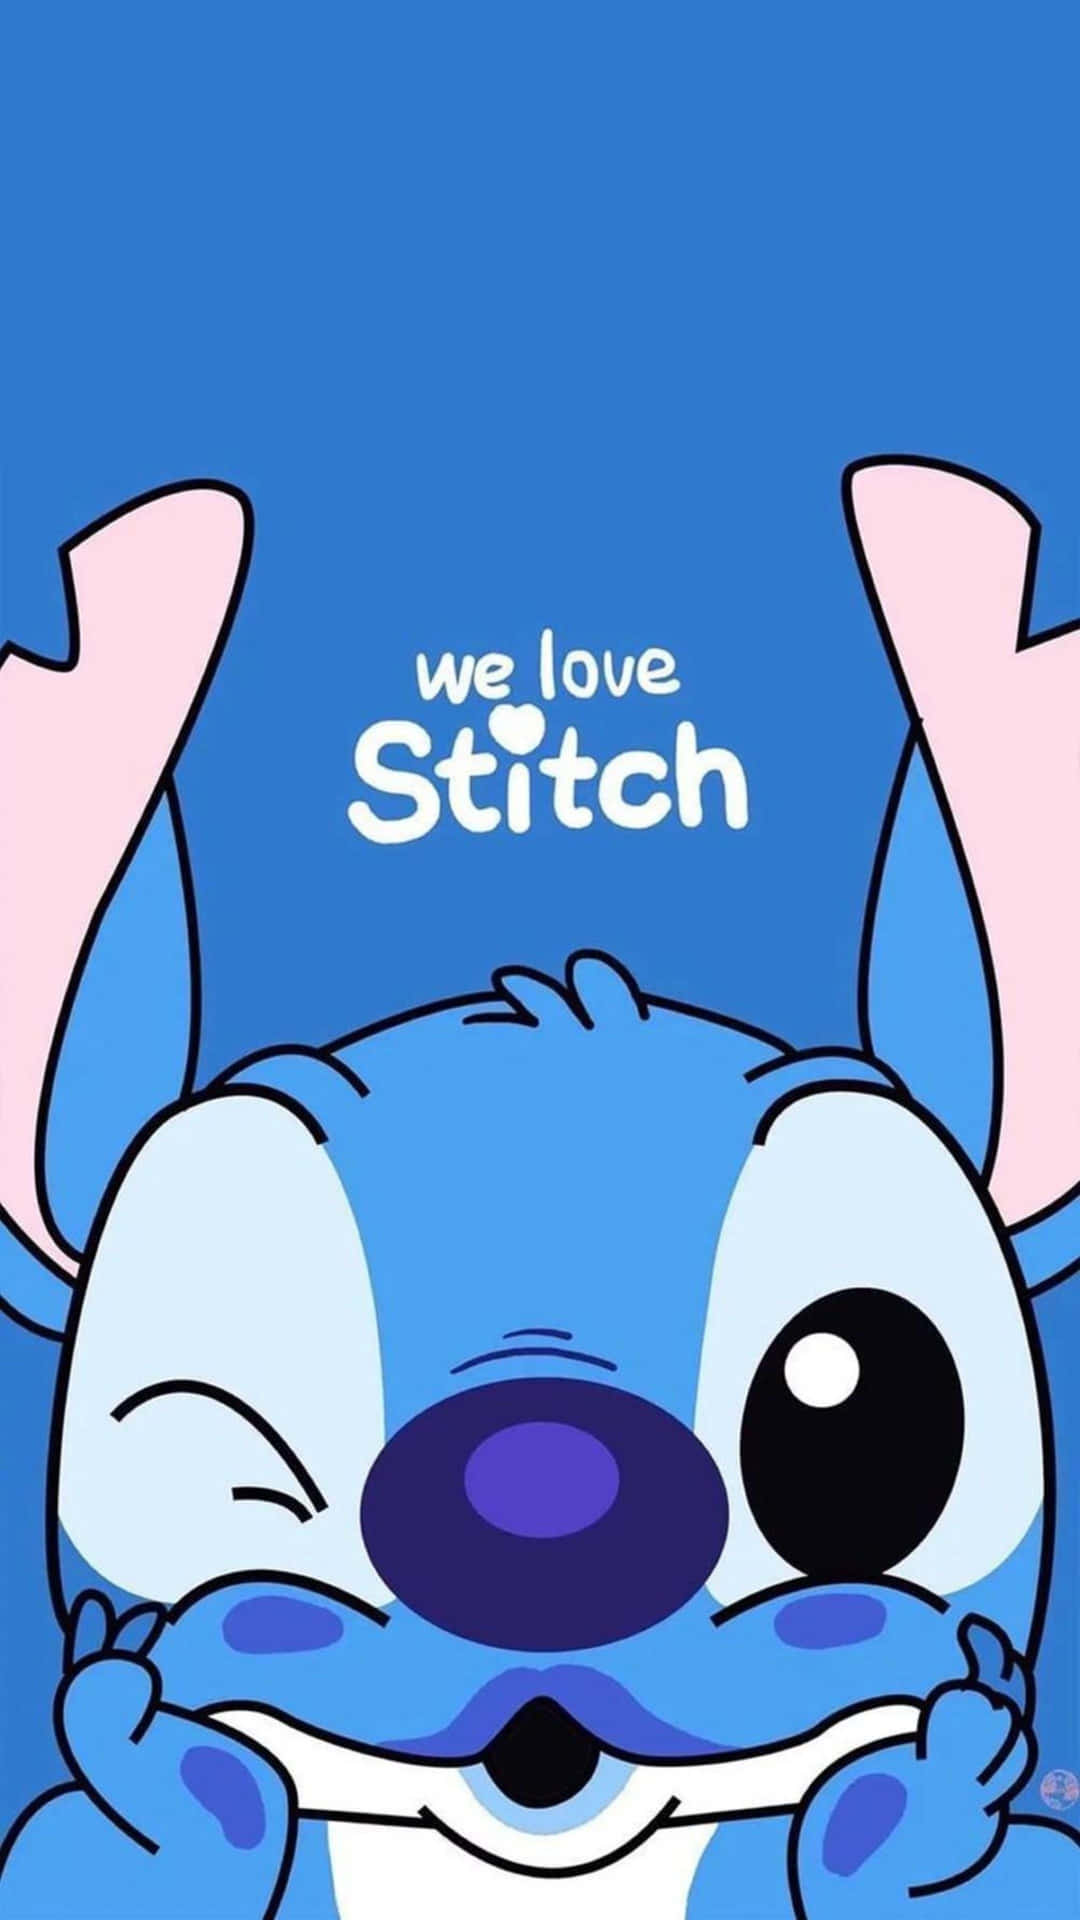 We Love Stitch Cartoon Image Wallpaper